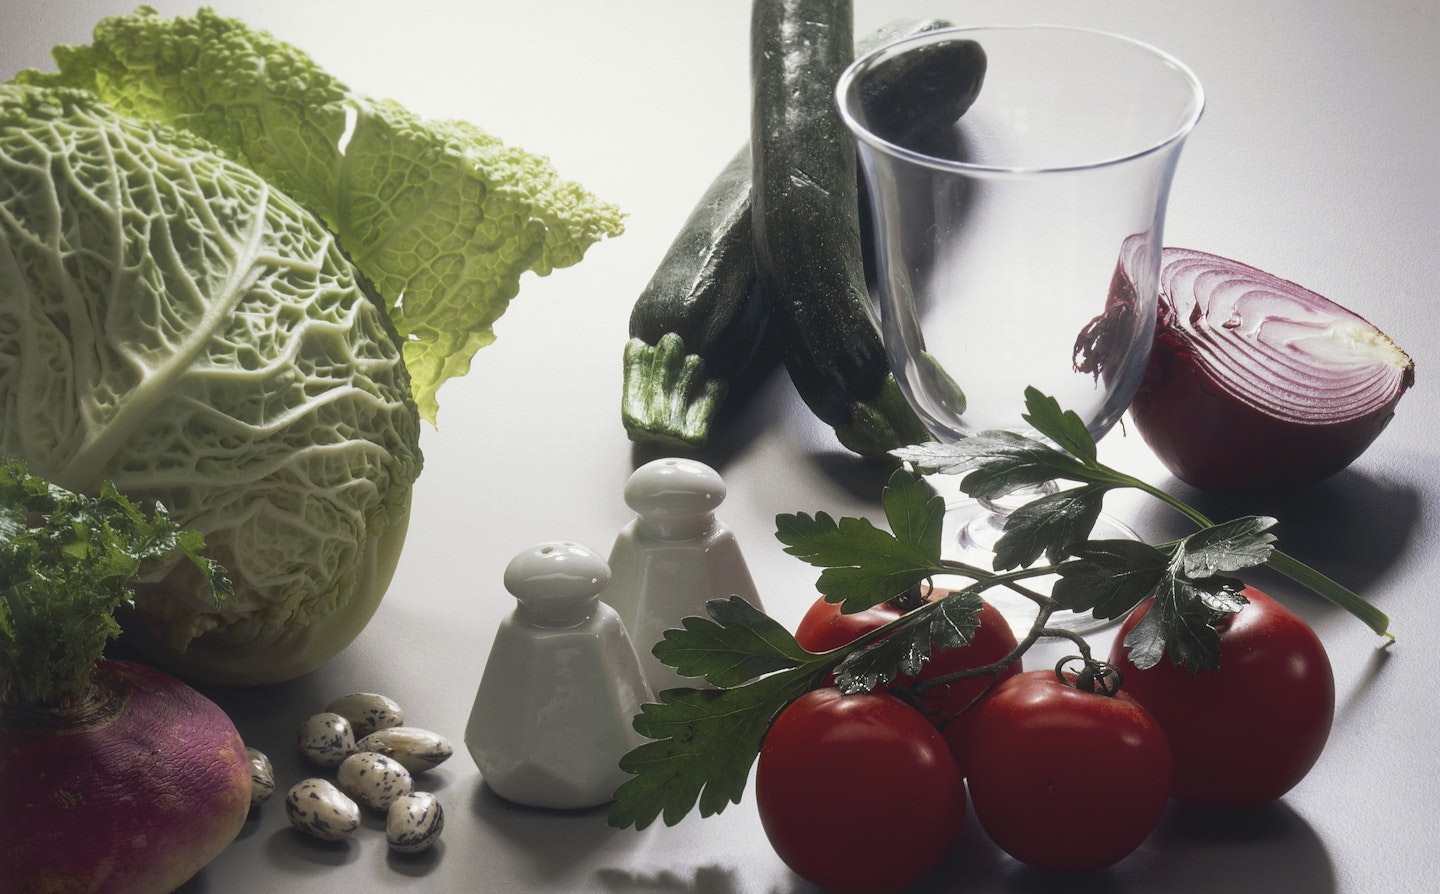 Cabbage soup diet ingredients